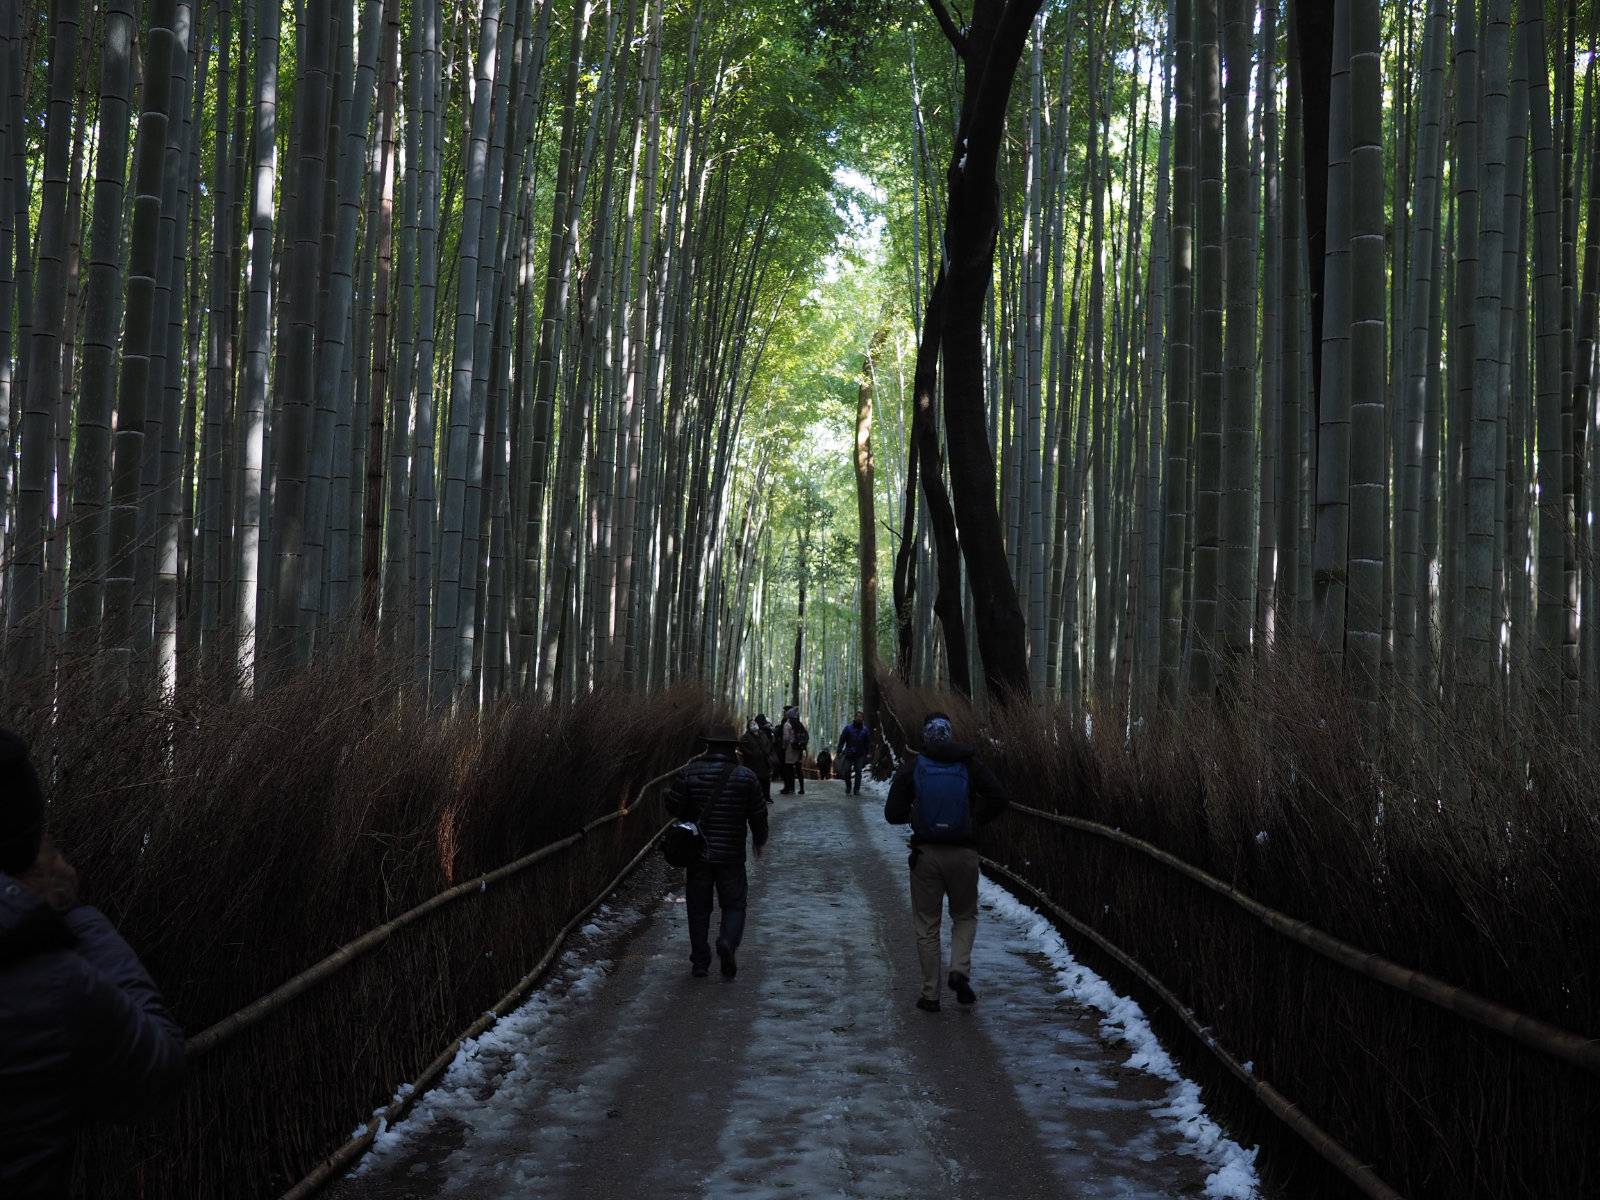 Bamboo grove path